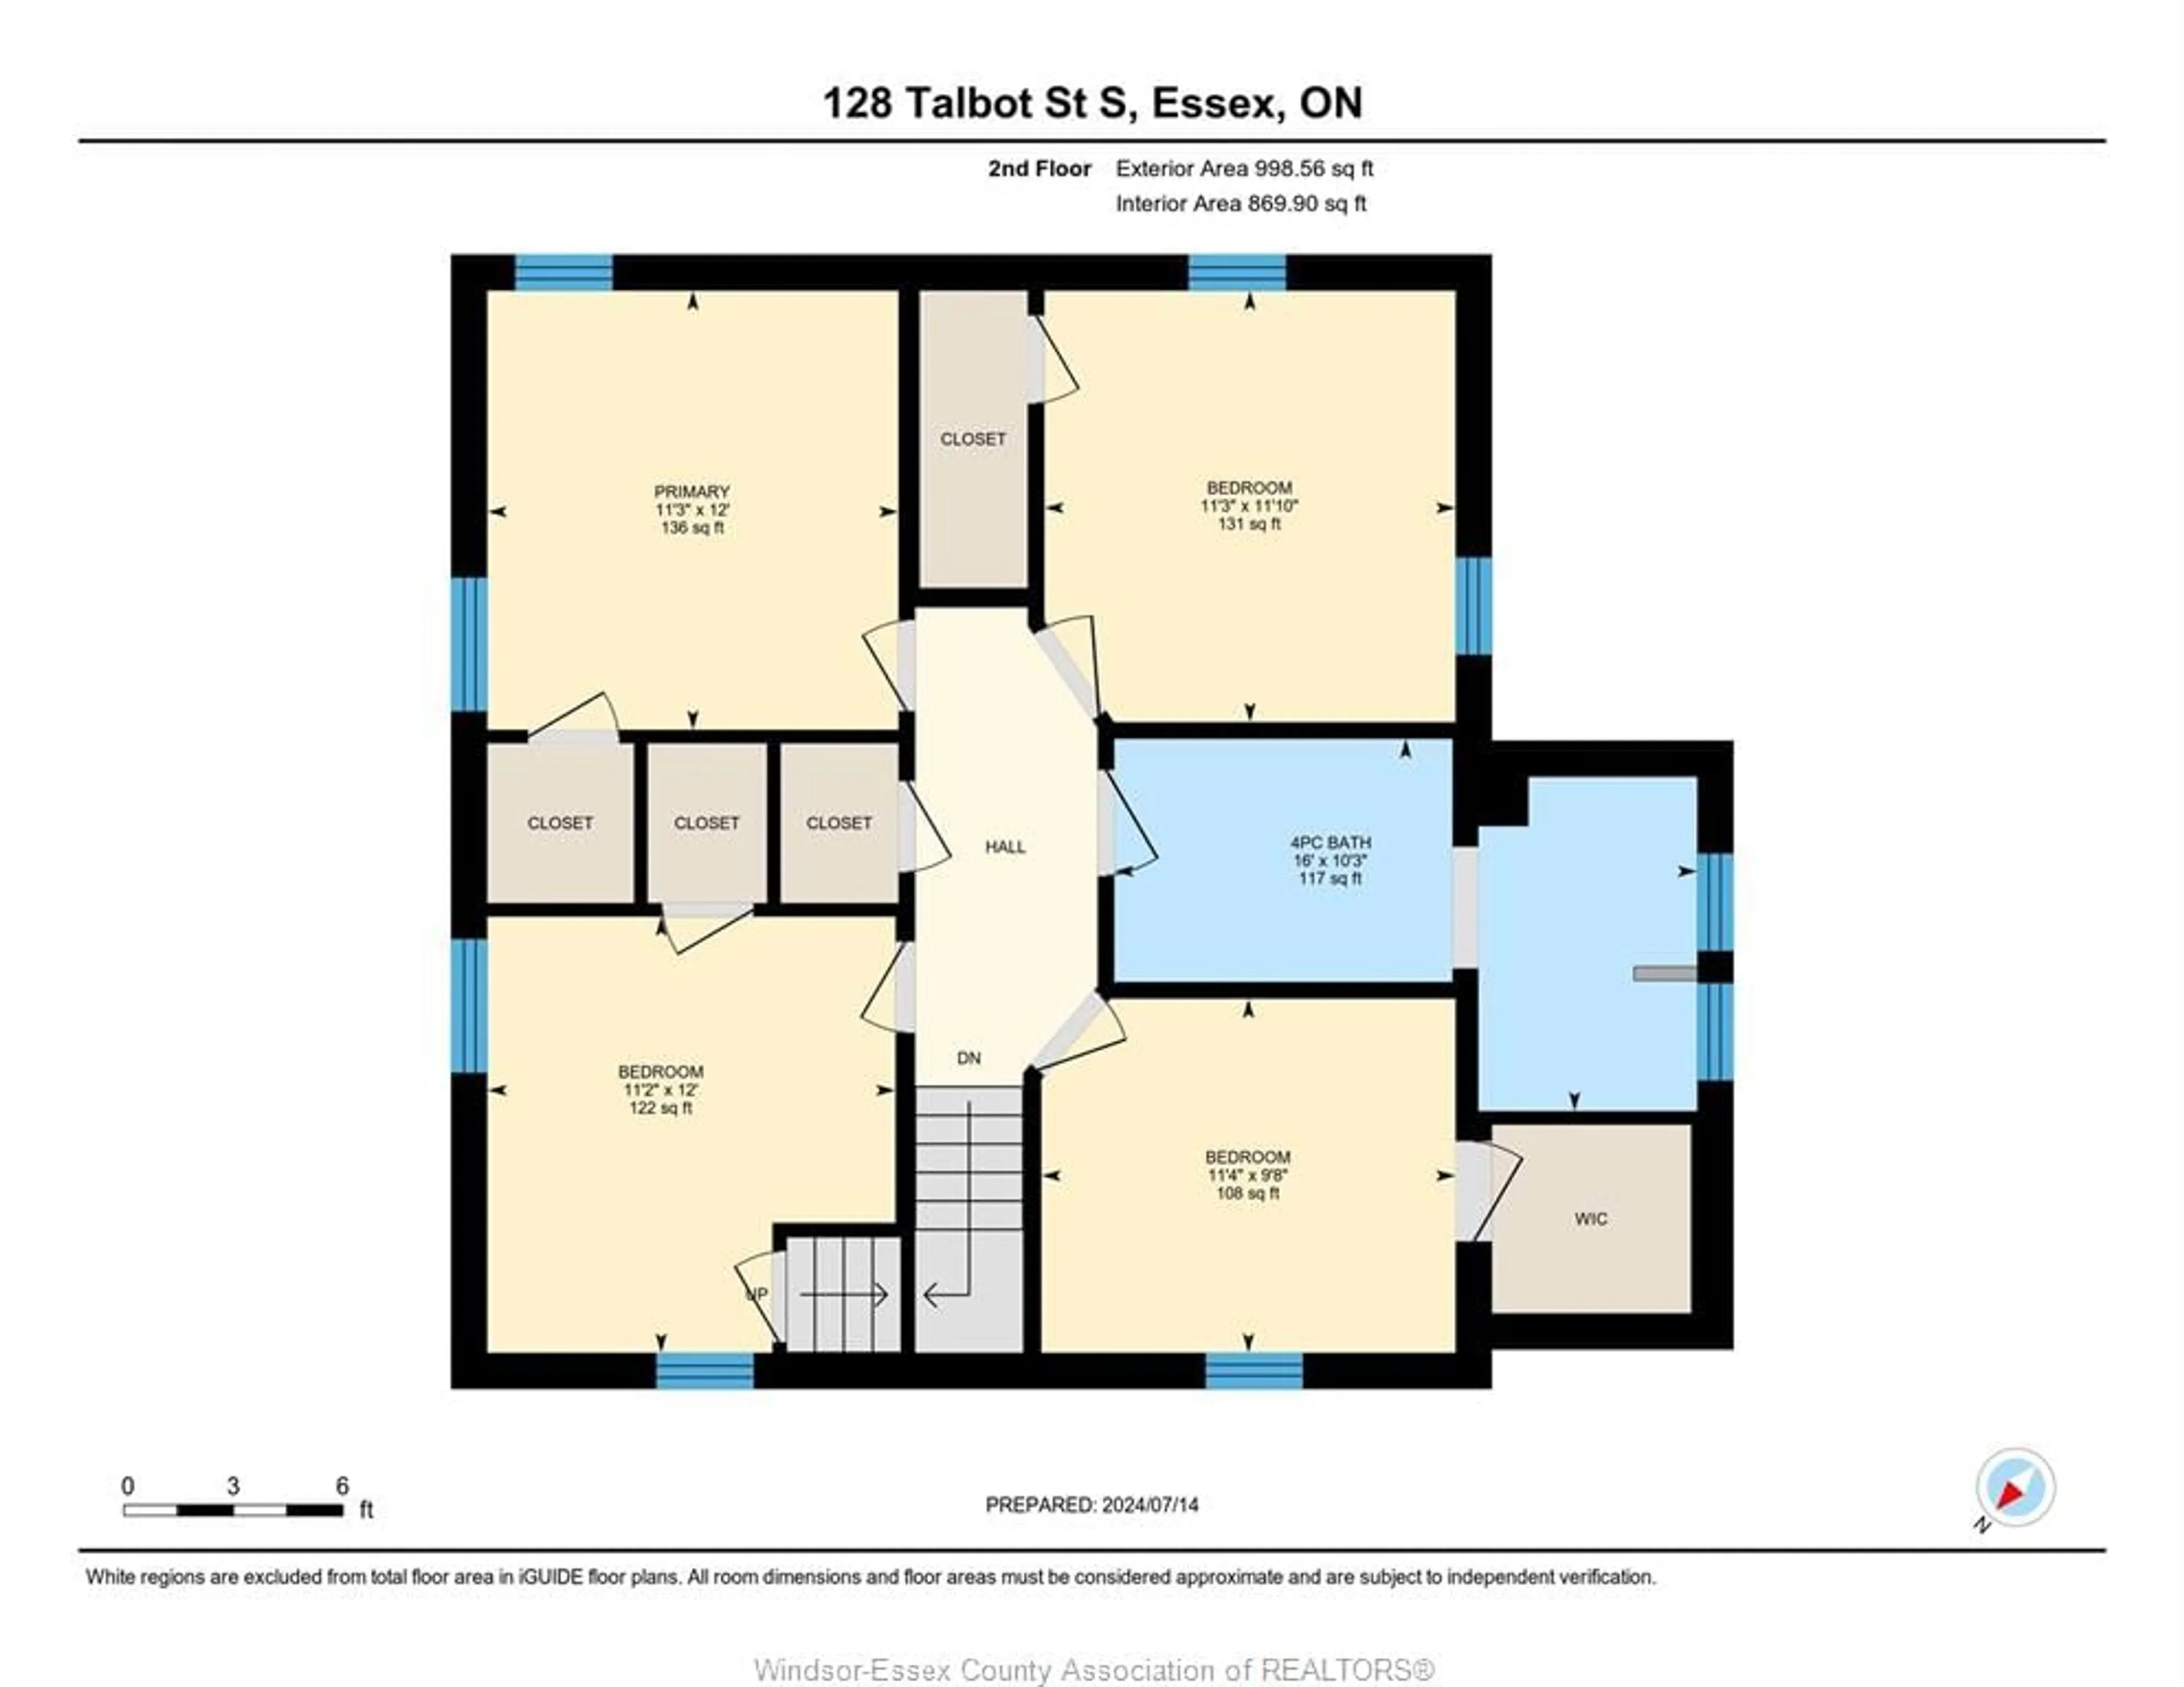 Floor plan for 128 TALBOT St, Essex Ontario N8M 1B4